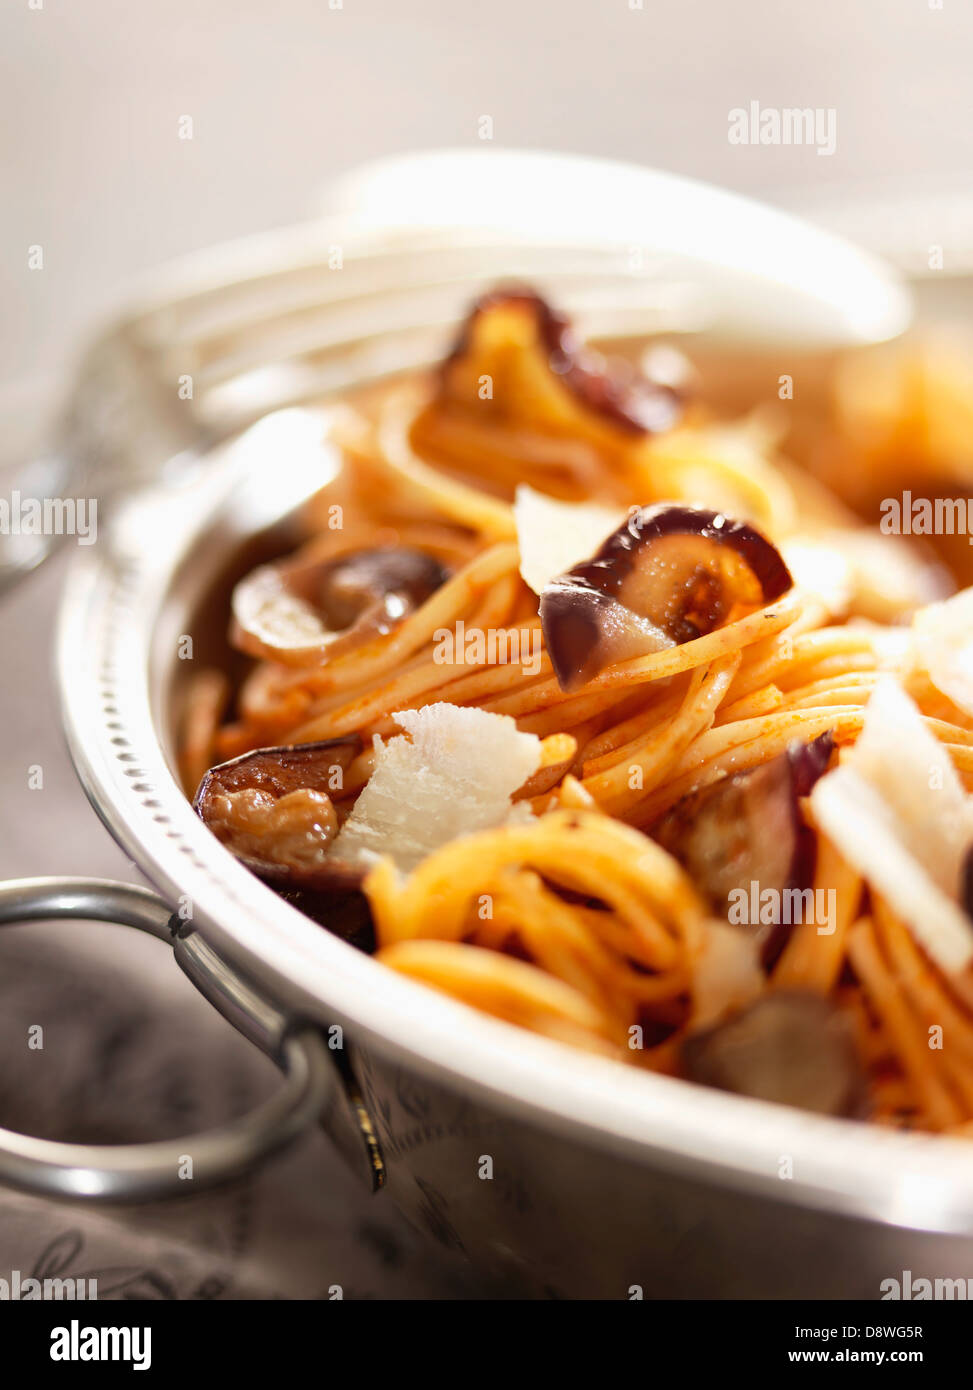 Spaghetti with mushrooms and parmesan Stock Photo